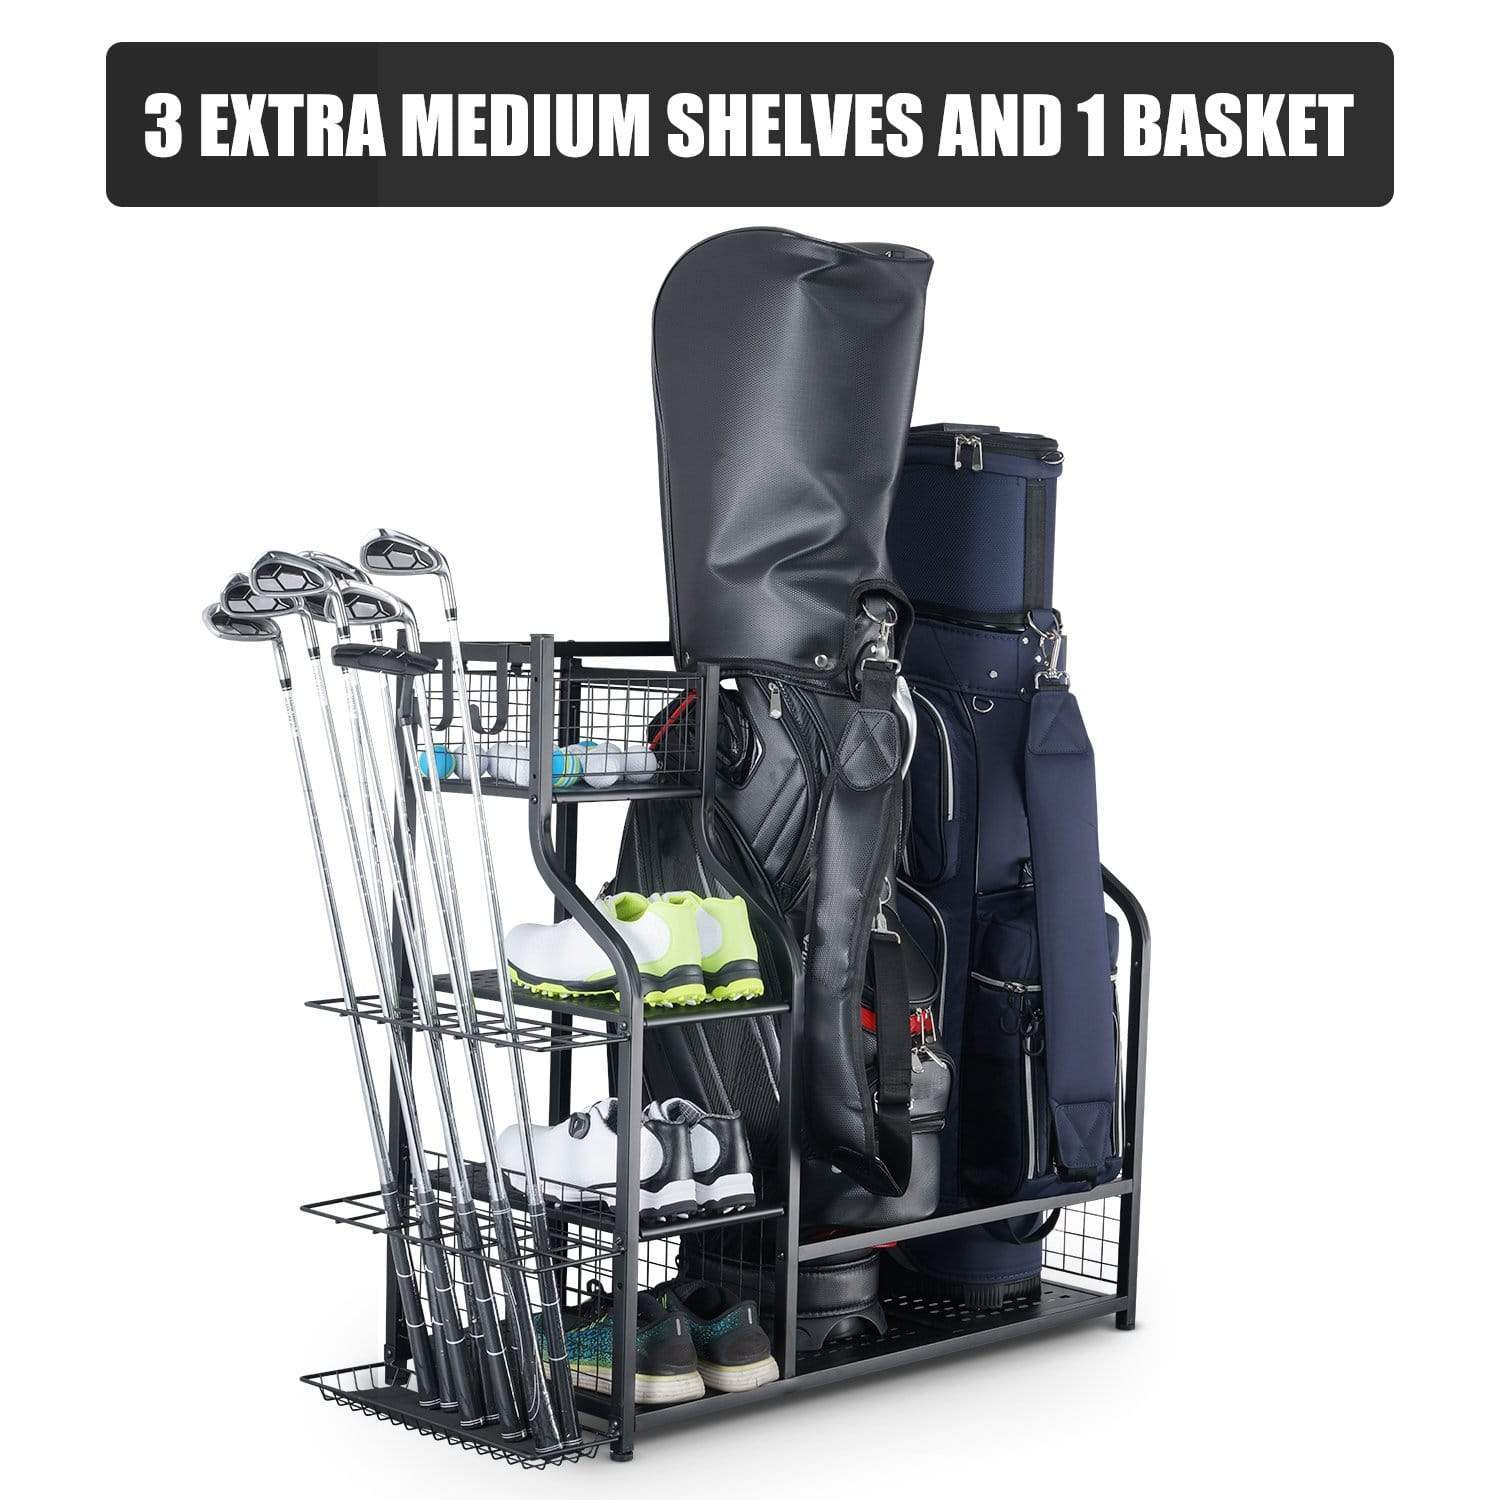 Mythinglogic Golf Bag Stand, Golf Organizer for Garage with Extra